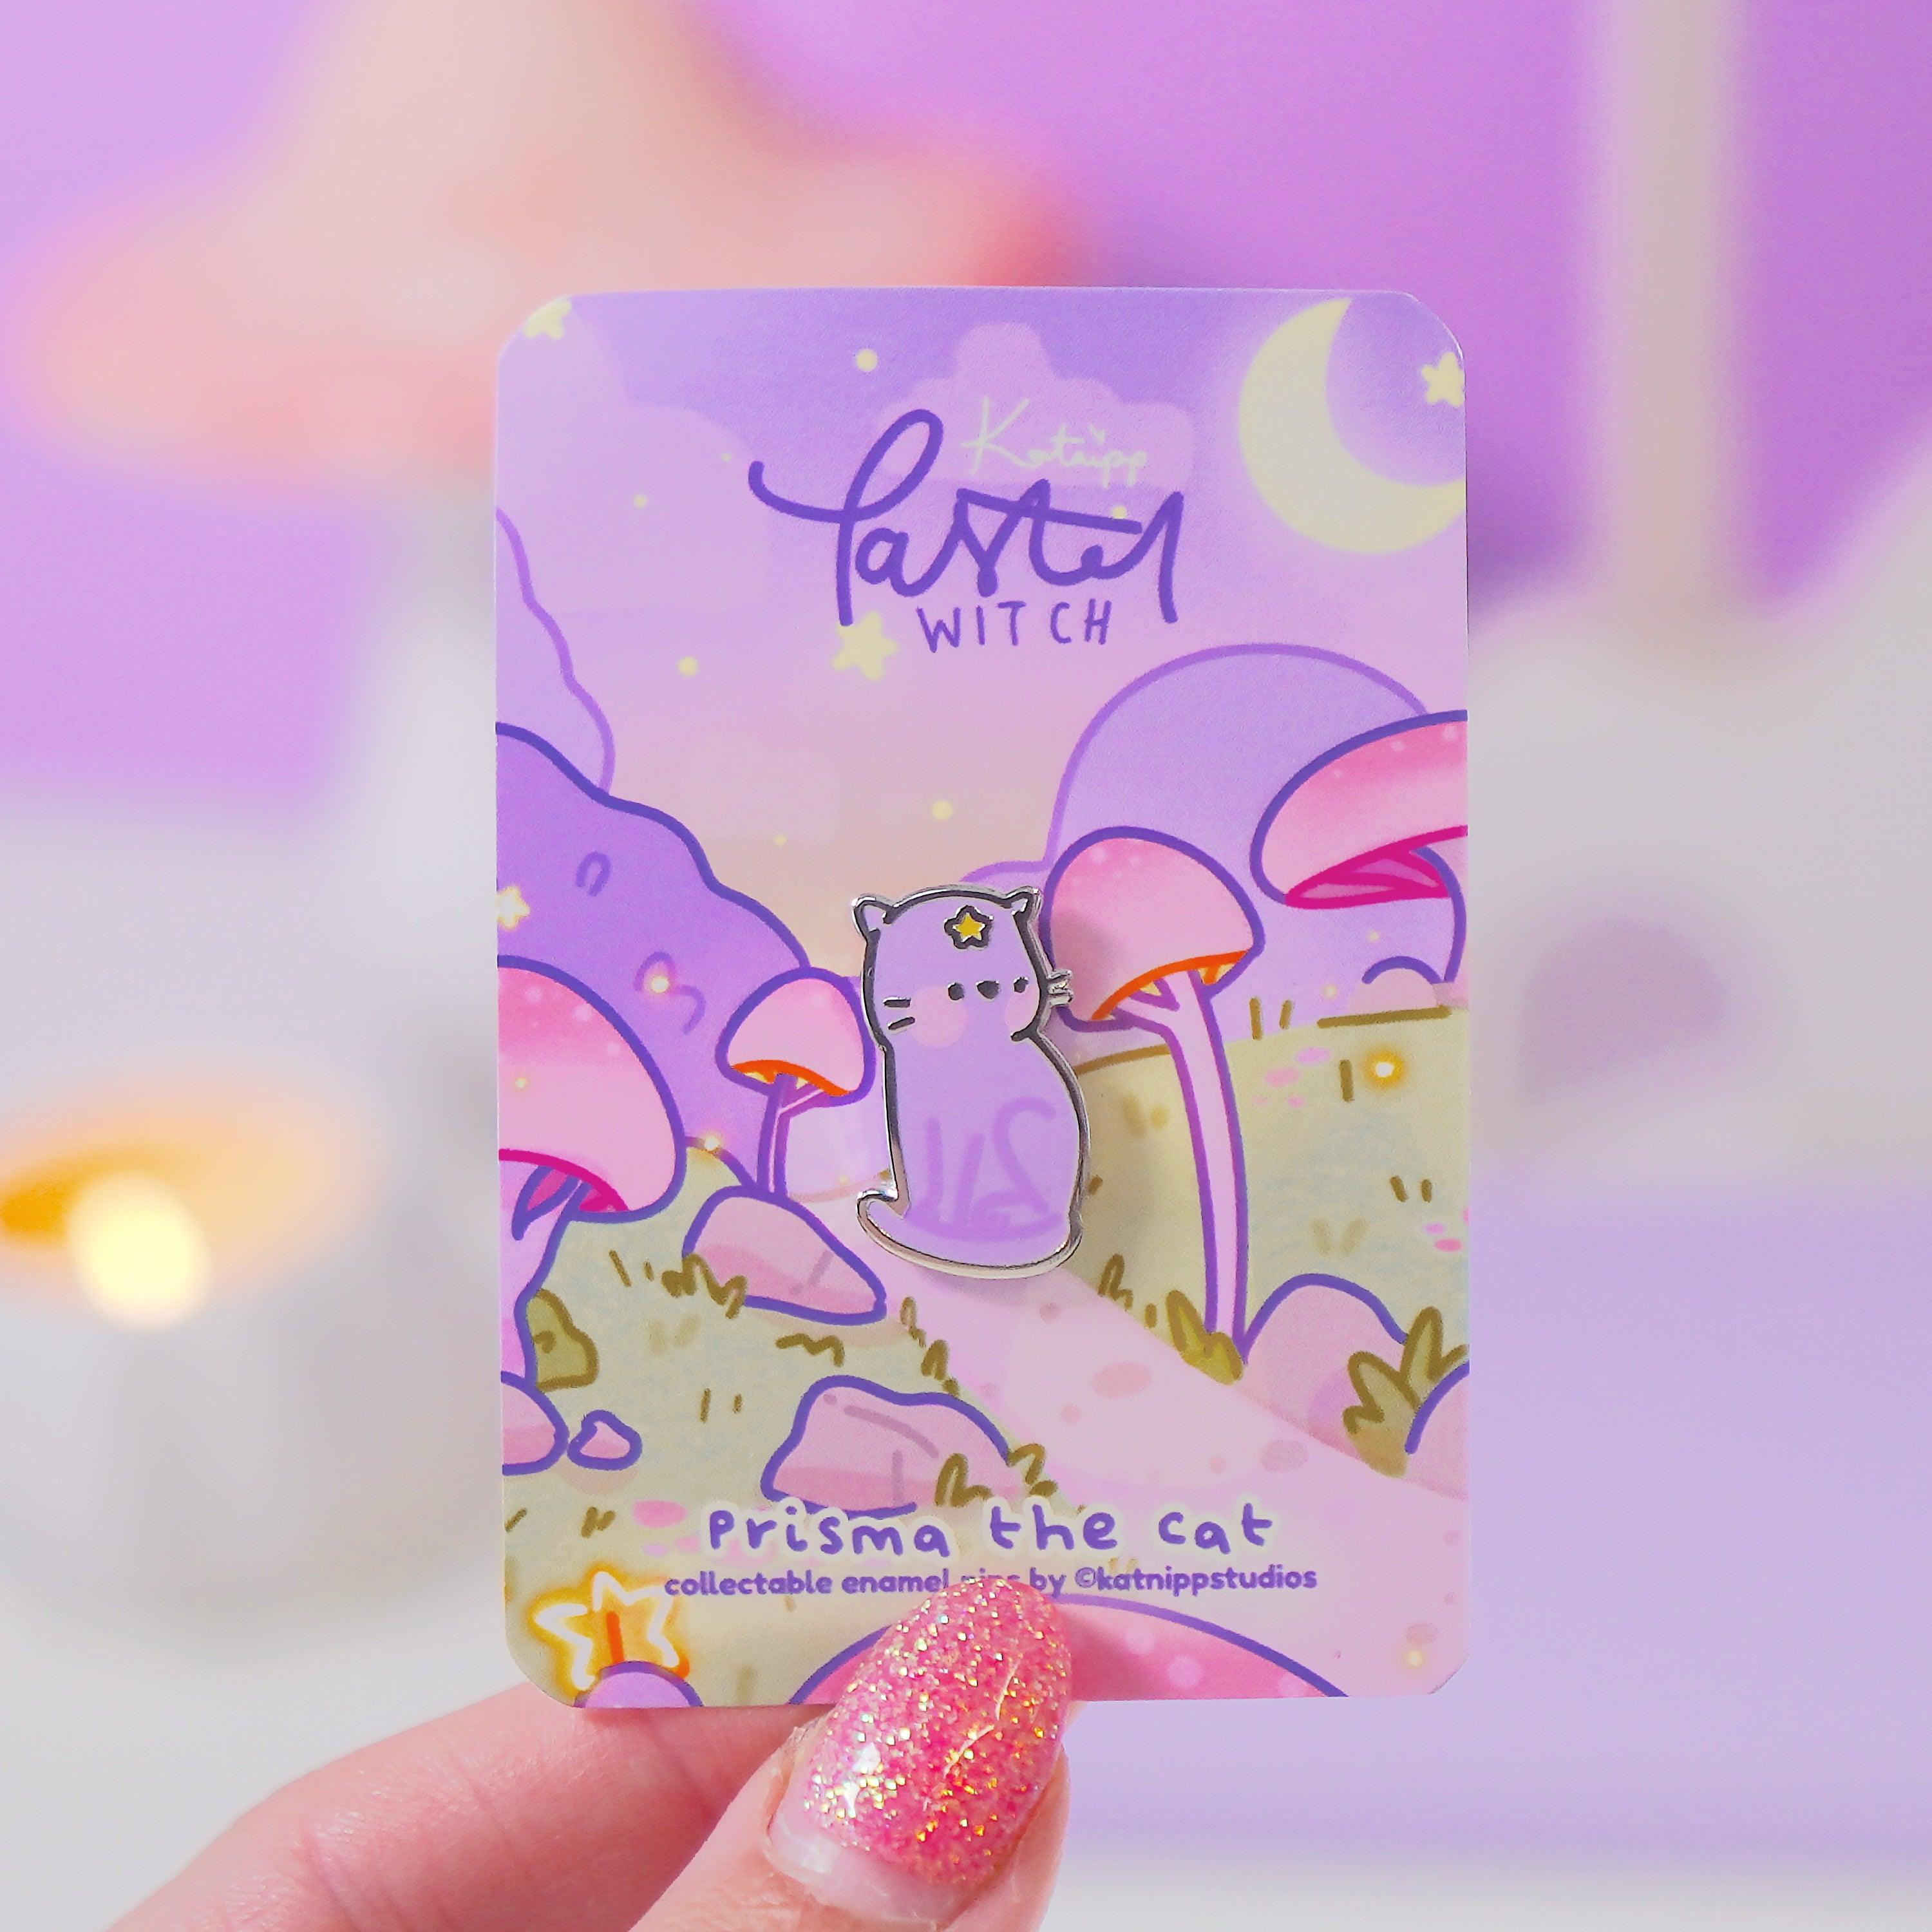 Prisma the Pastel Witch Cat Enamel Pin - Katnipp Studios